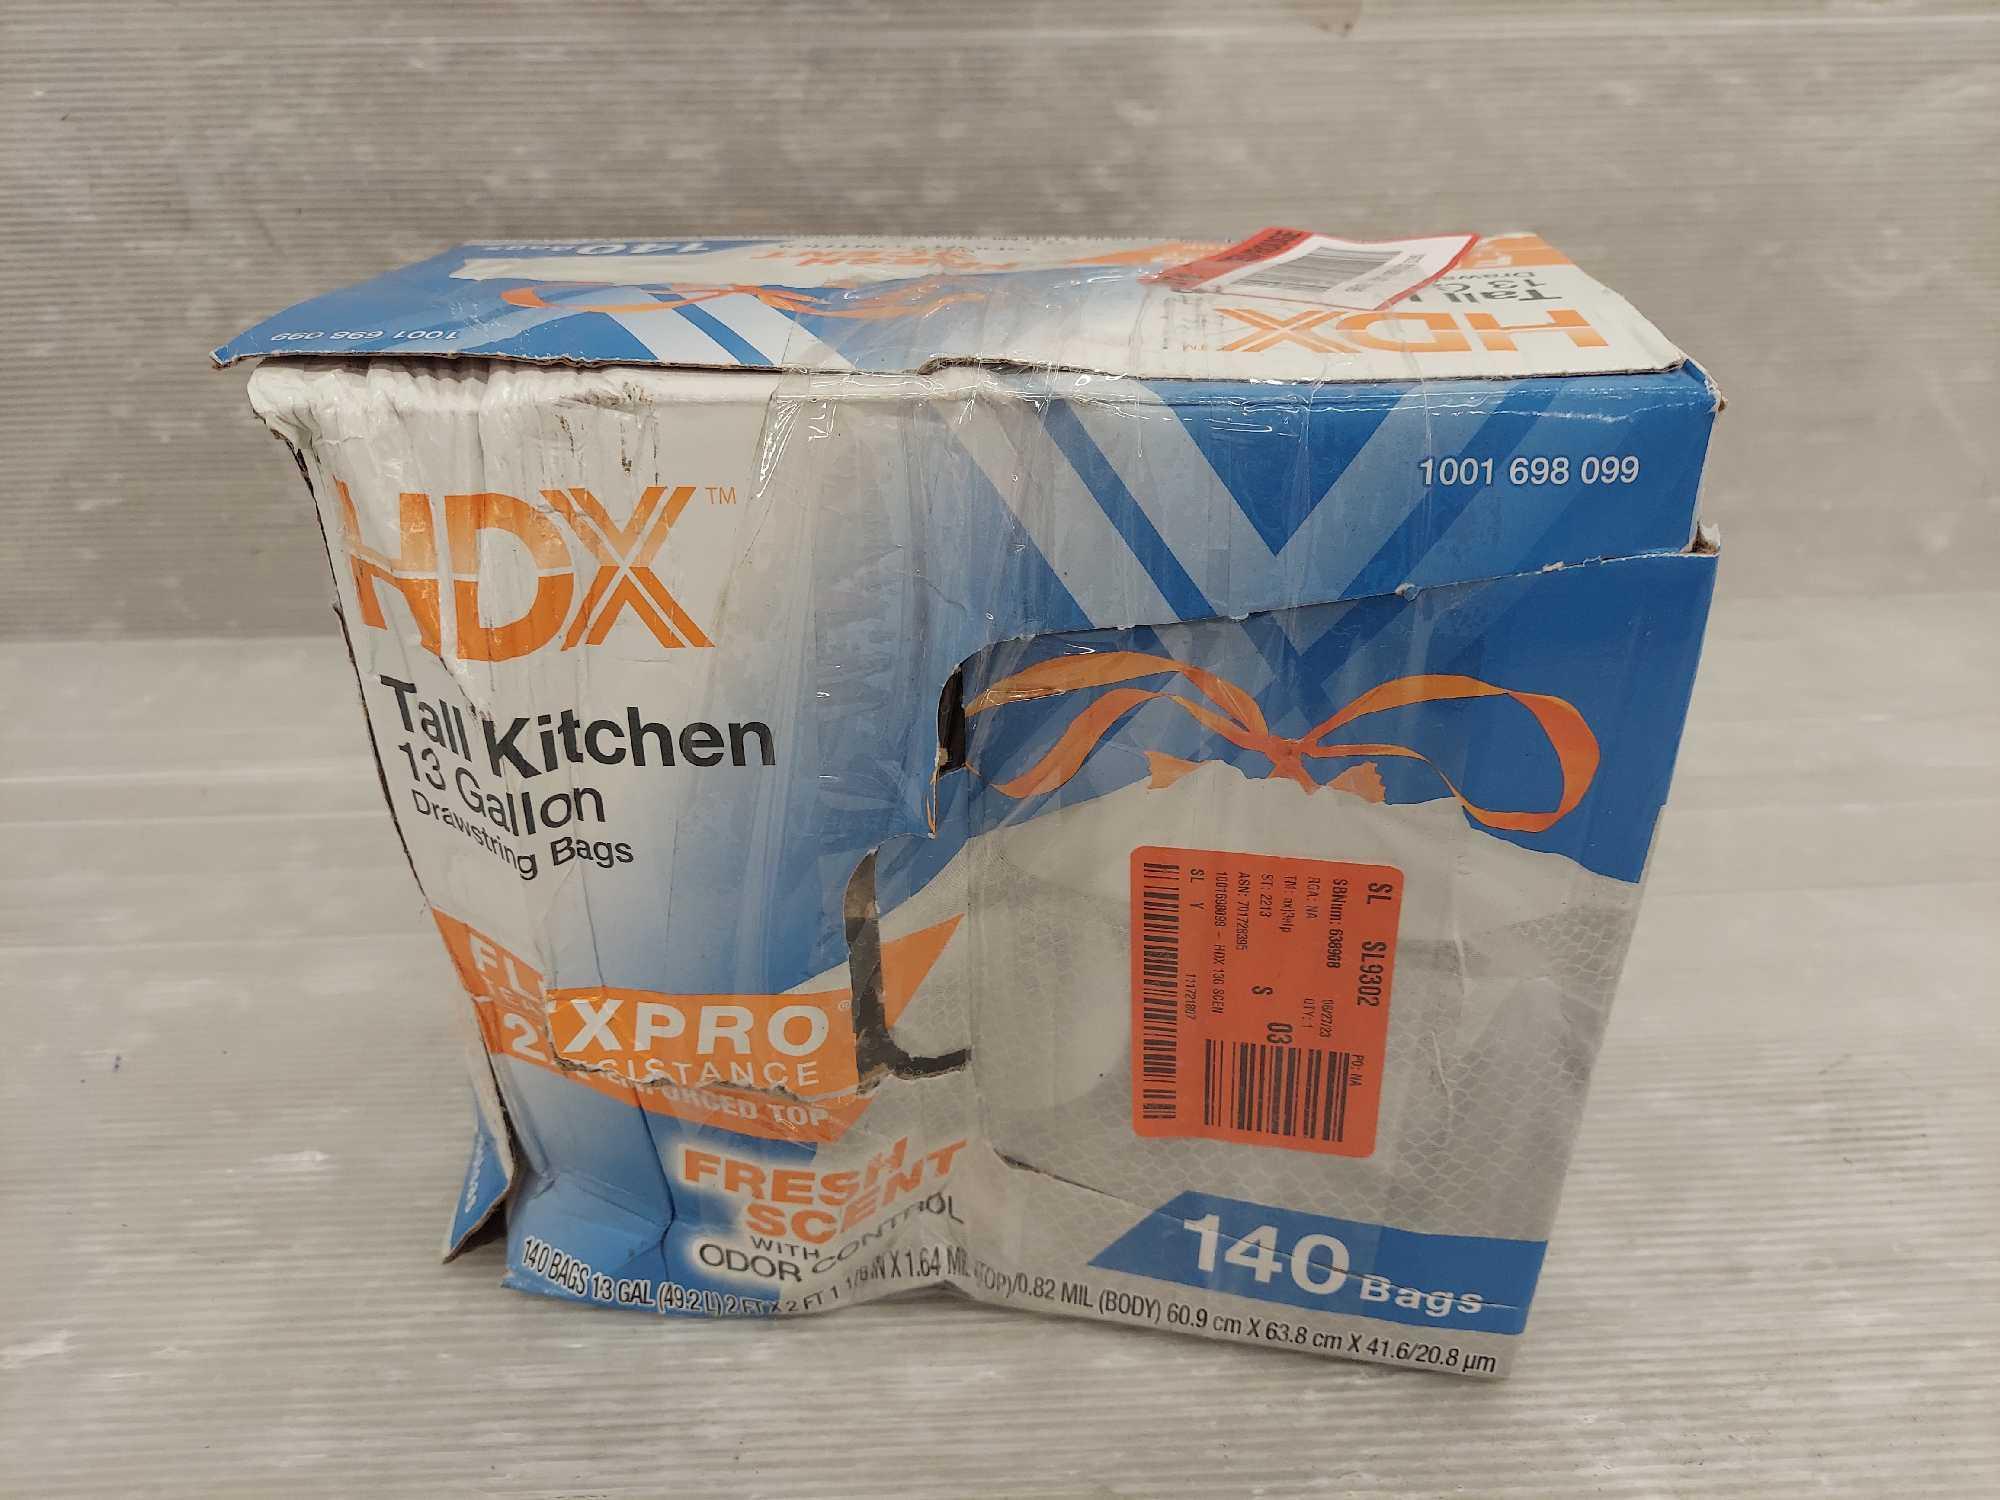 FlexPro 13 Gallon Fresh Scent Kitchen Trash Bag (140-Count)